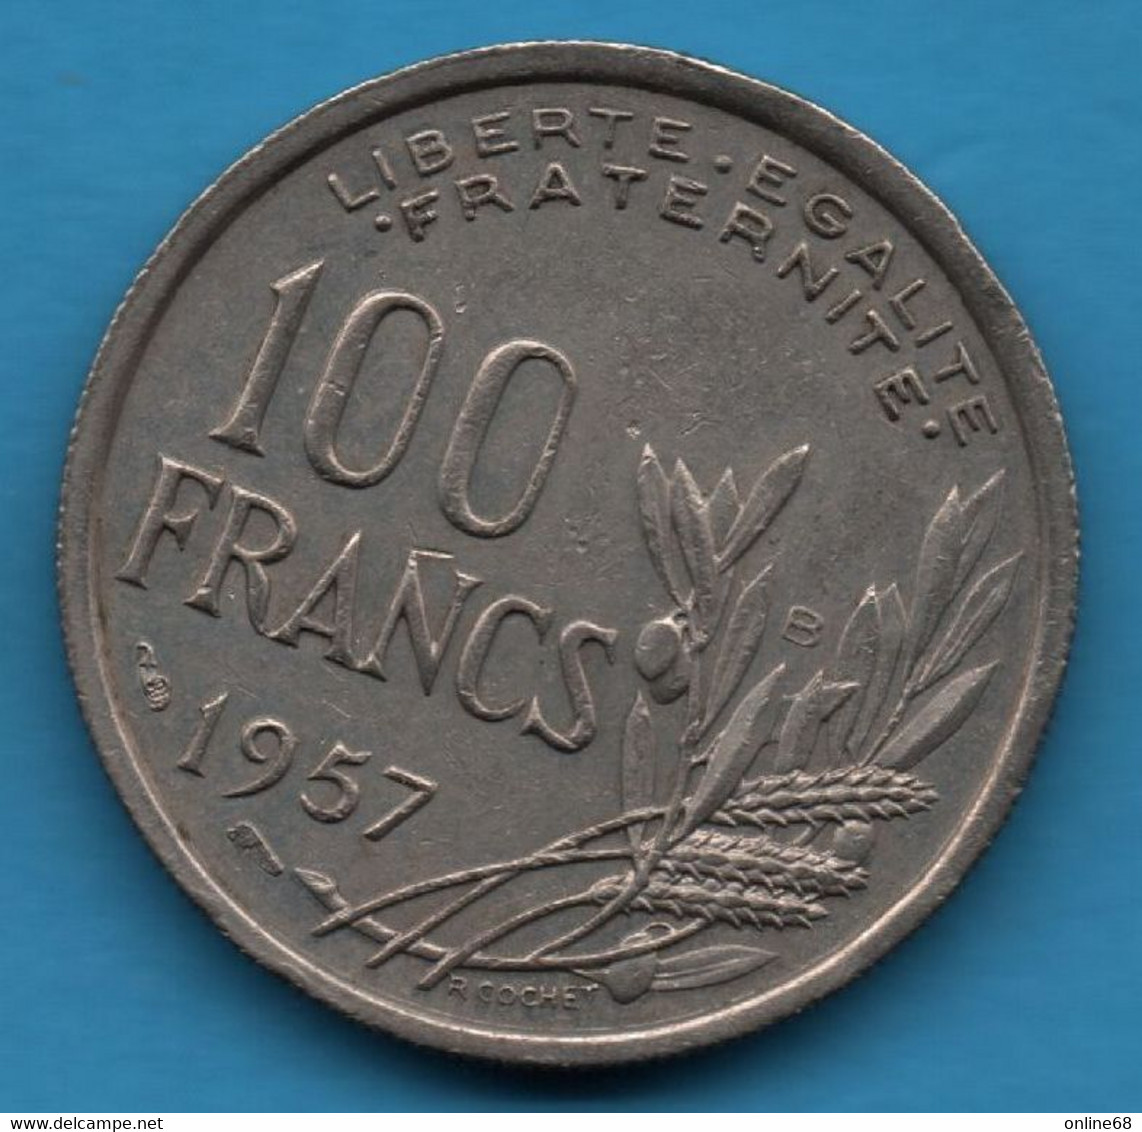 FRANCE 100 FRANCS 1957 B KM# 919 COCHET - 100 Francs